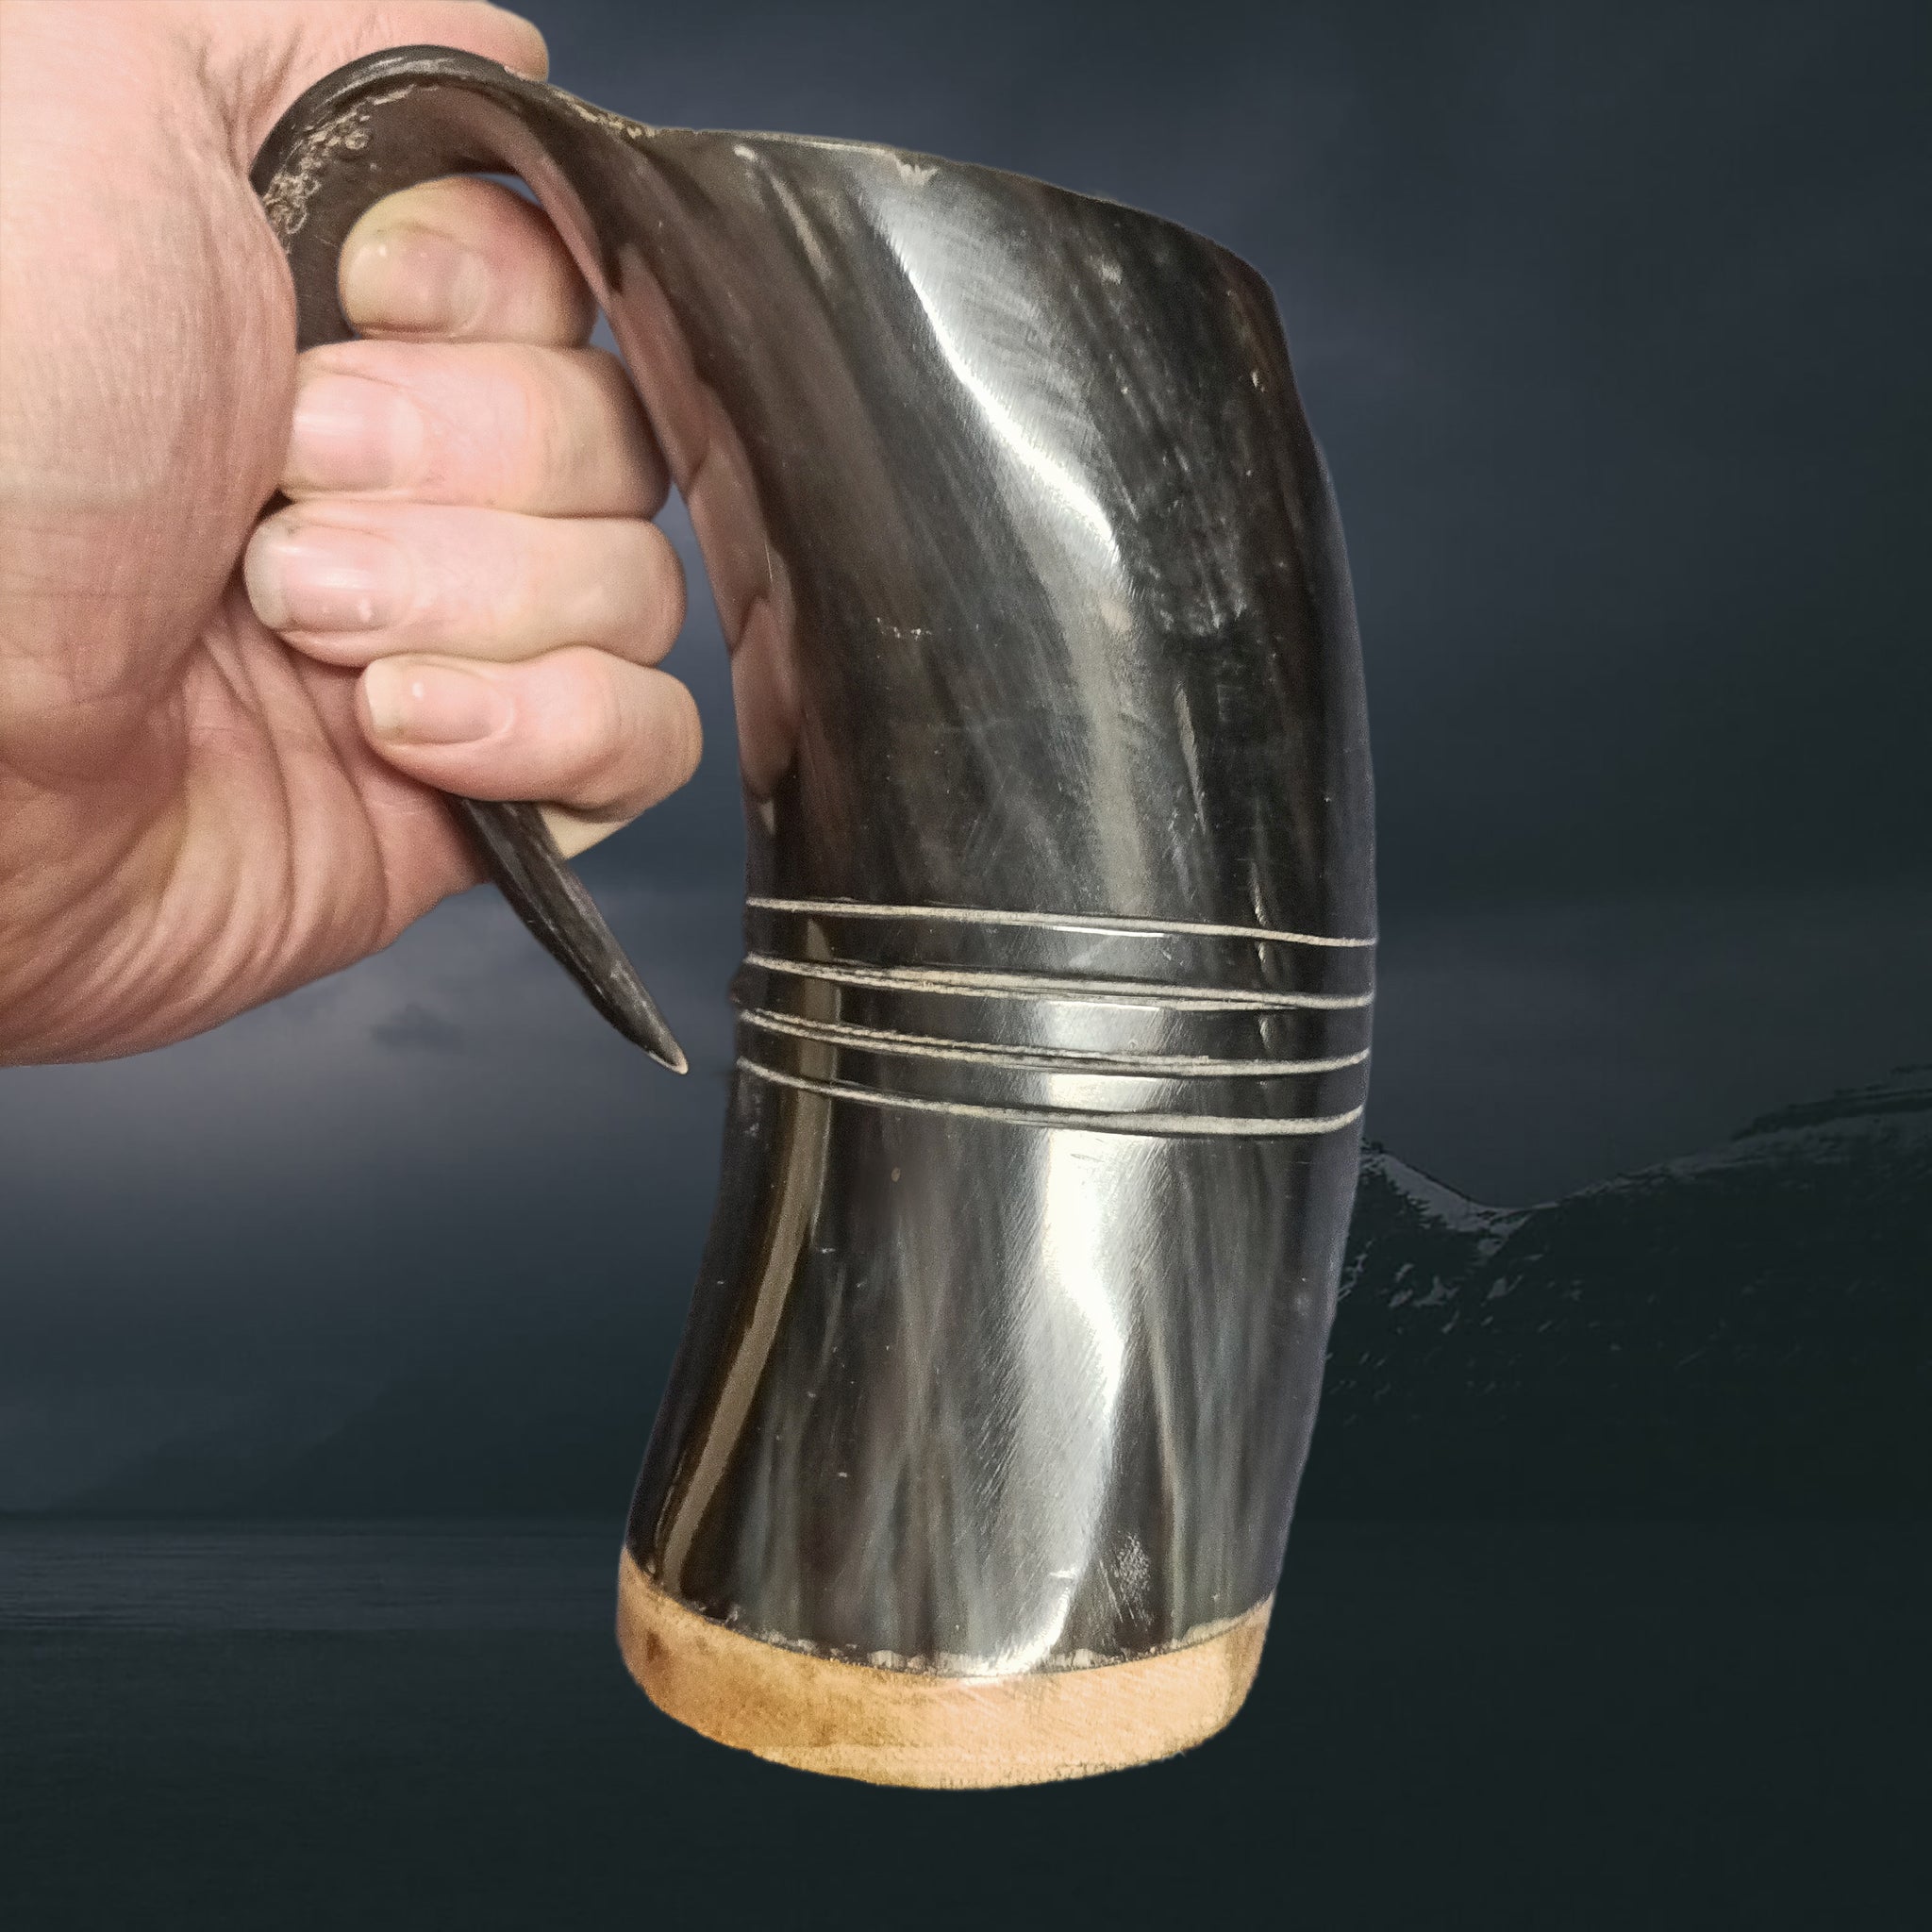 Polished & Treated Ox Horn Beer Mug with Hardwood Base & Ridge design - Medium Size in Hand